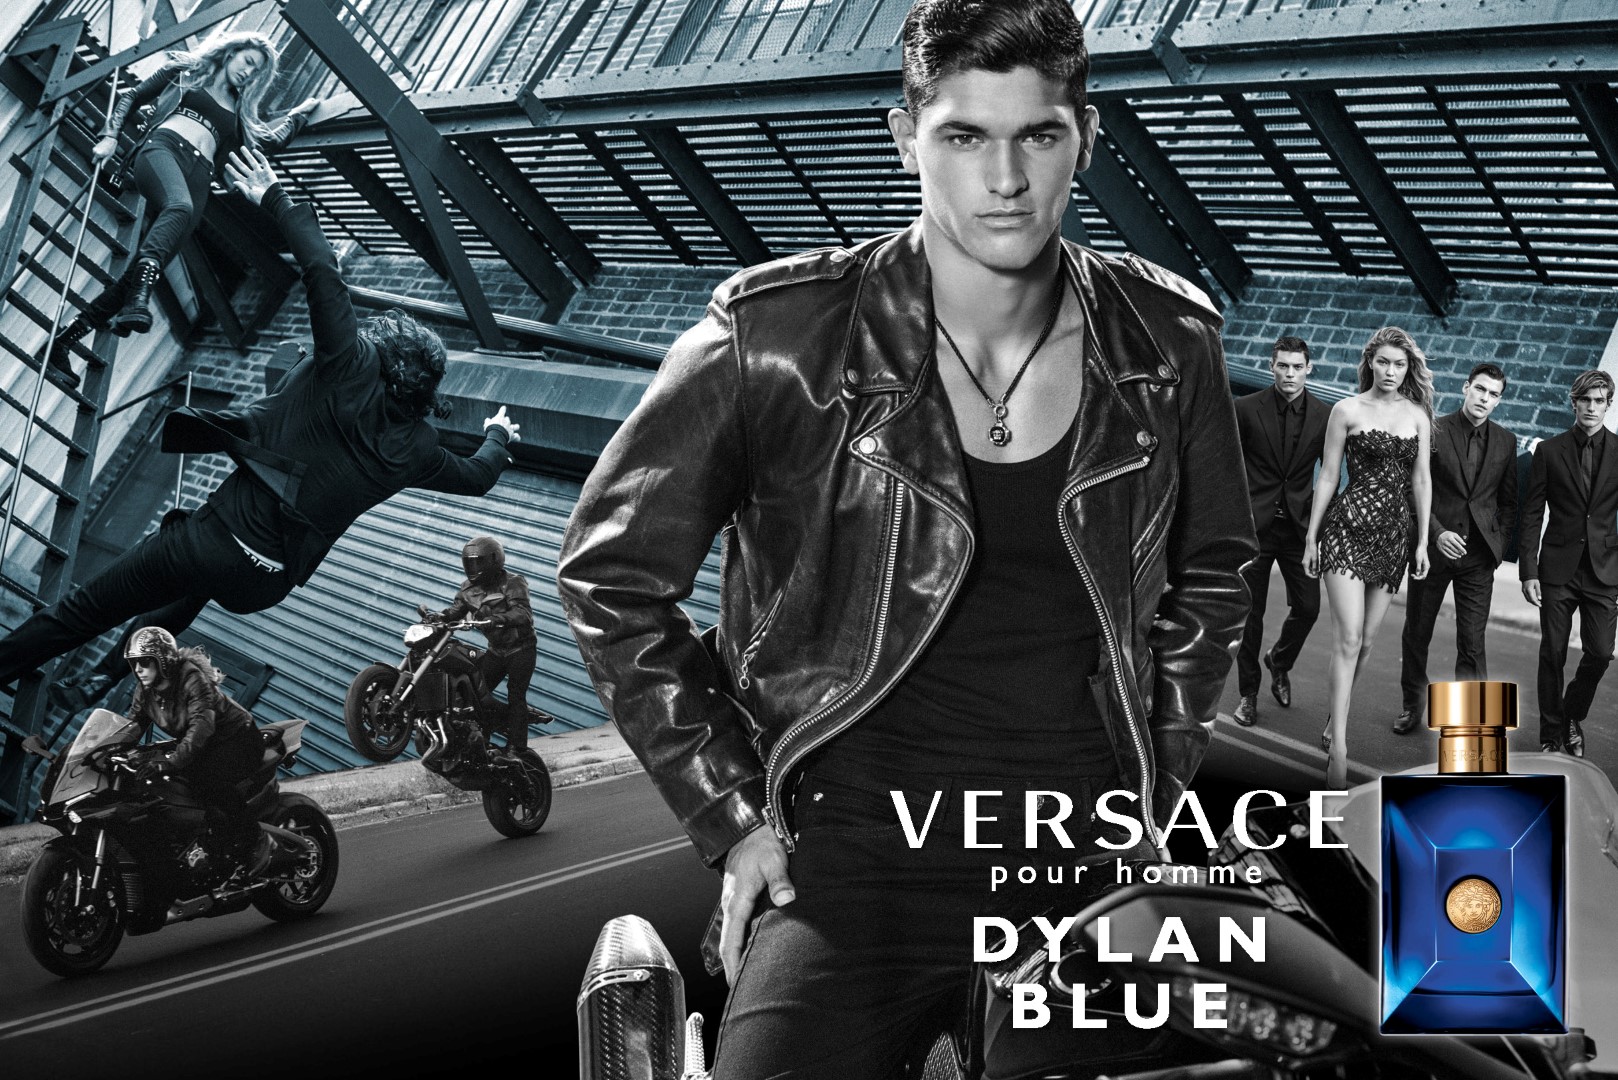 Versace profumo Dylan Blue: la nuova fragranza maschile